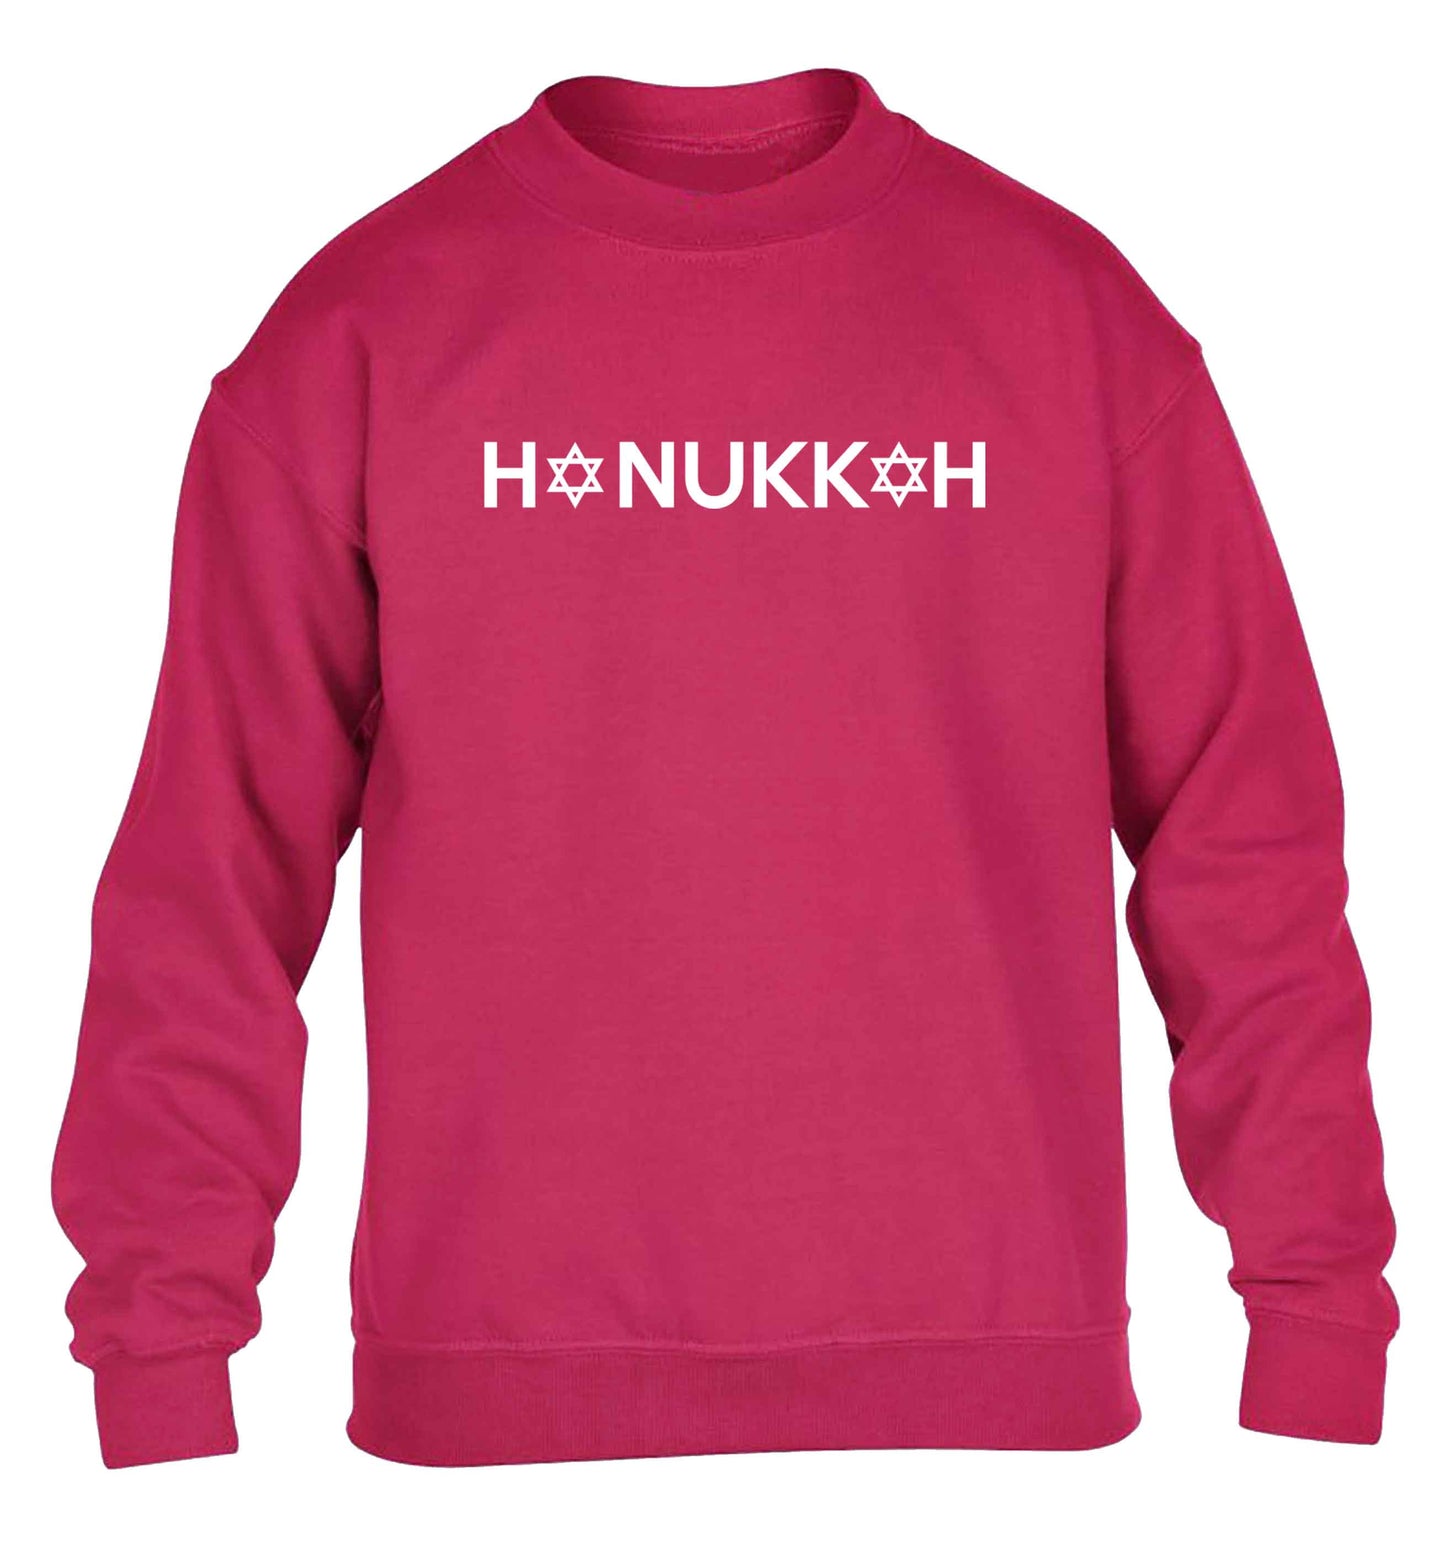 Hanukkah star of david children's pink sweater 12-13 Years